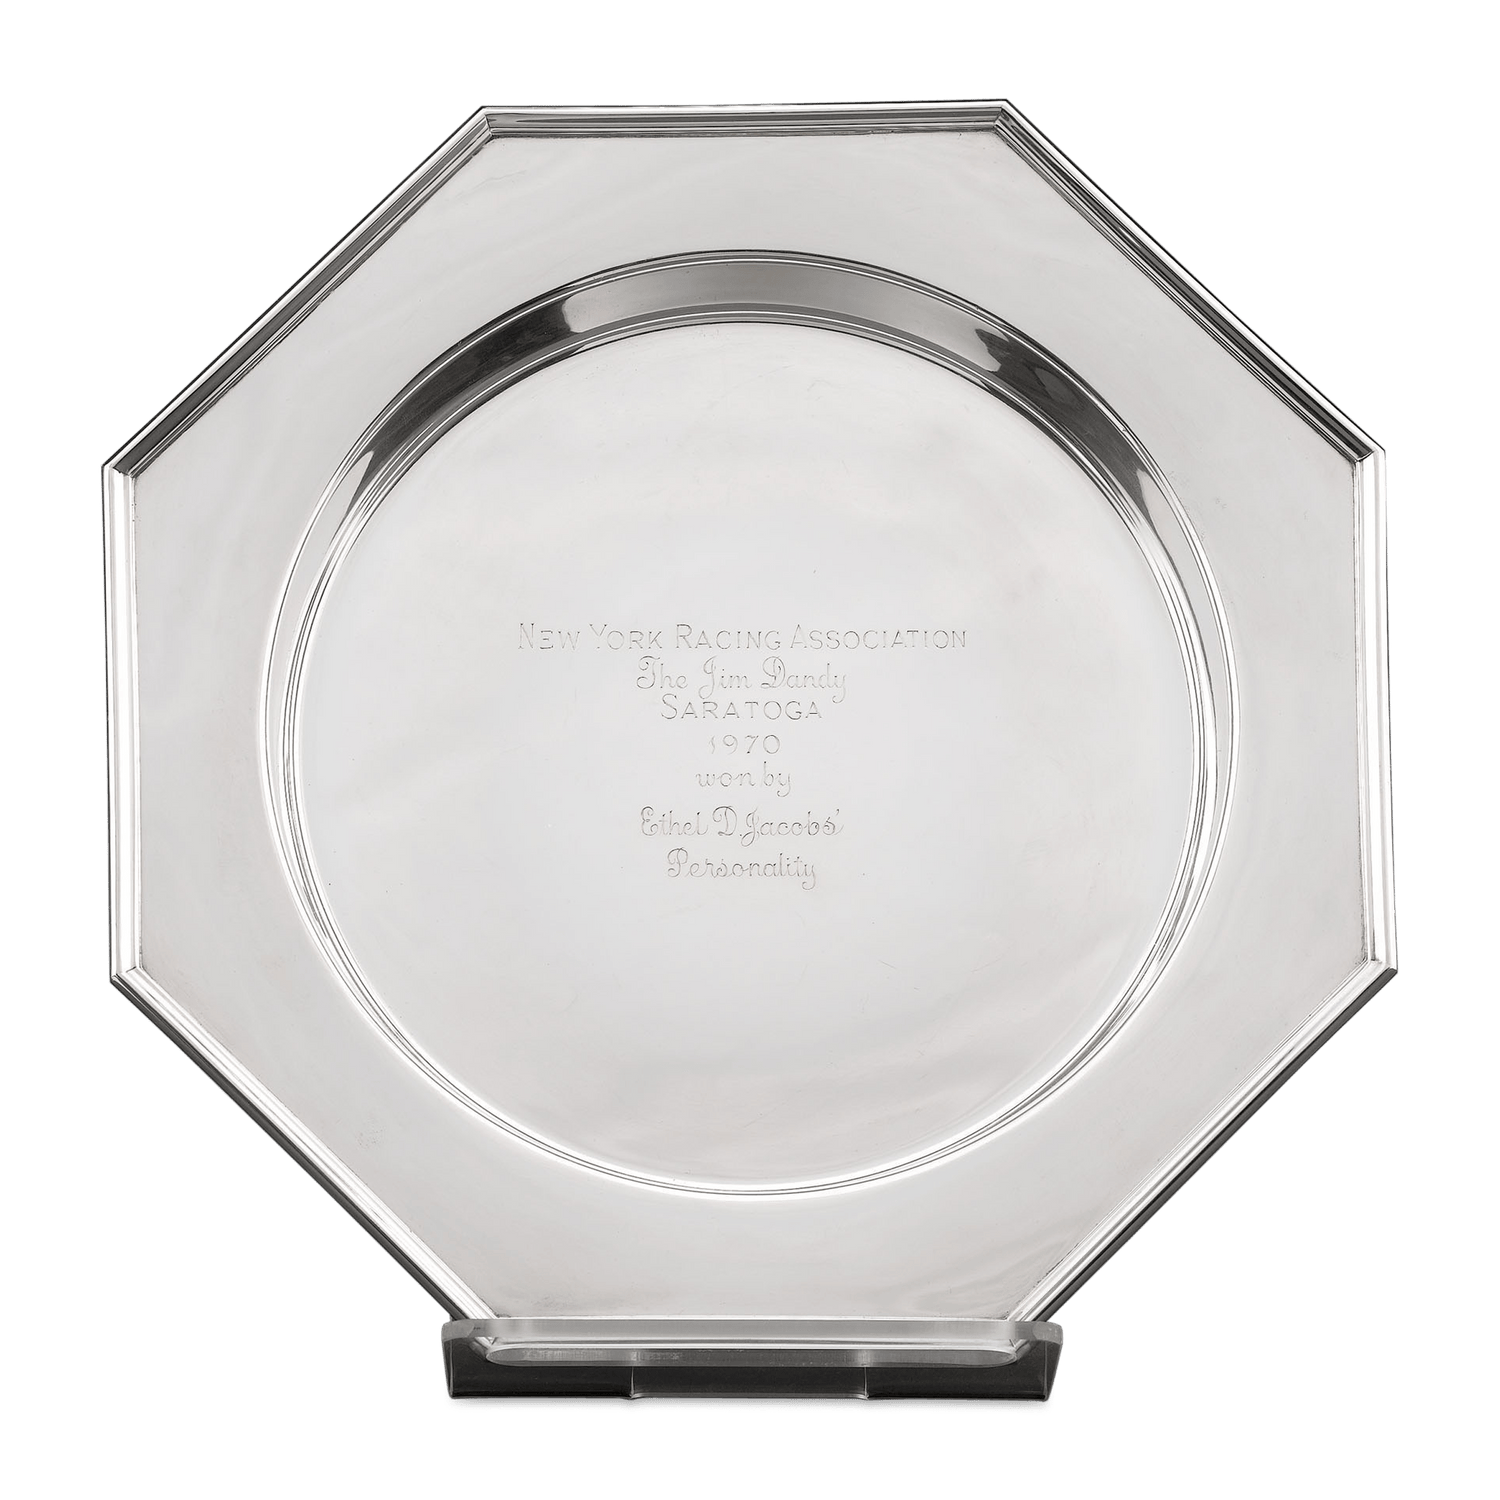 The Saratoga Trophy